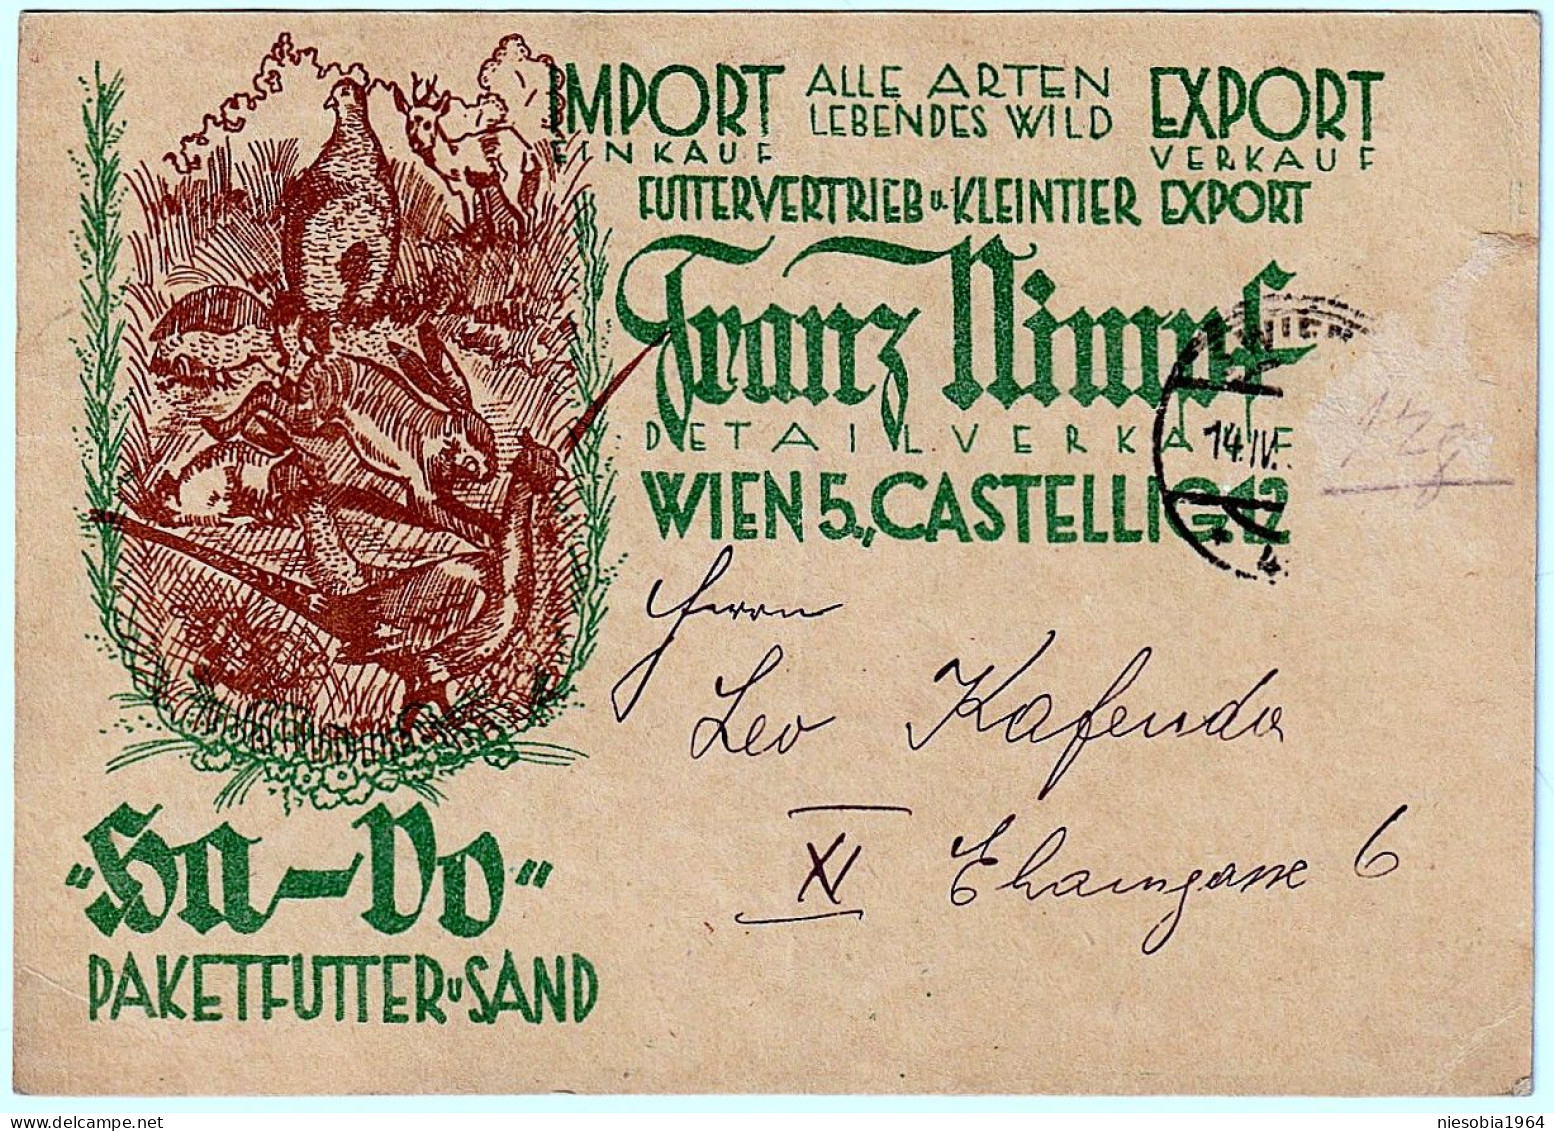 Franz Nimpf Wien Pet Shop Advertising Postkarte 14 IV 1934 - Postkarten